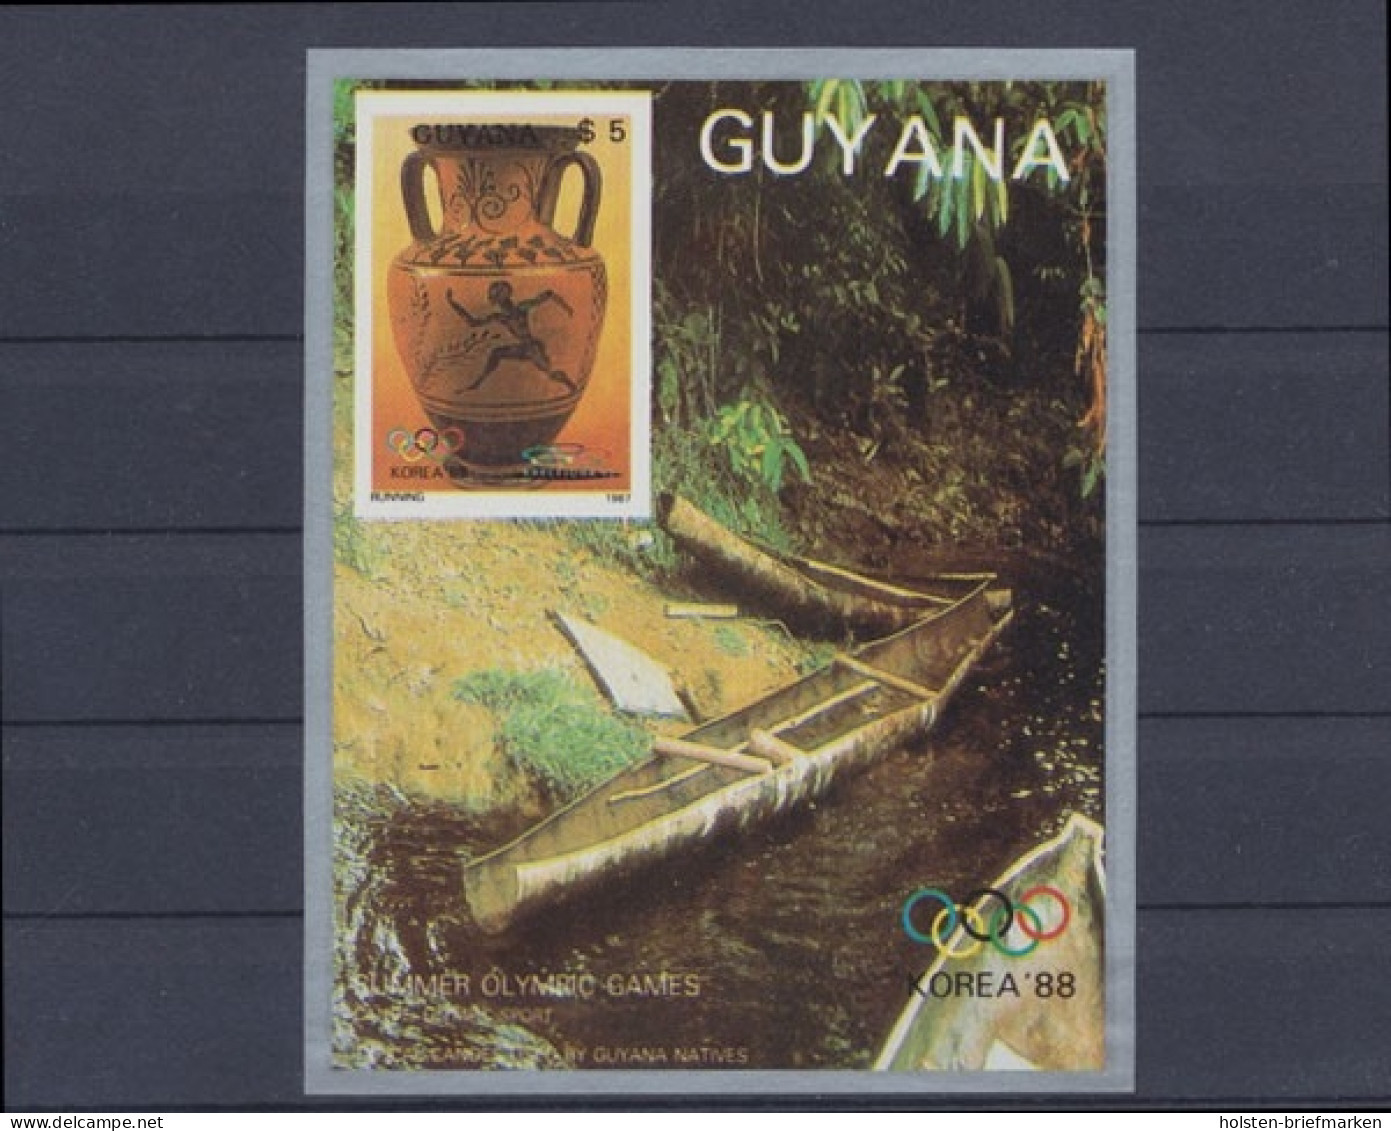 Guyana, Michel Nr. 2062 B Block, Postfrisch - Guyane (1966-...)